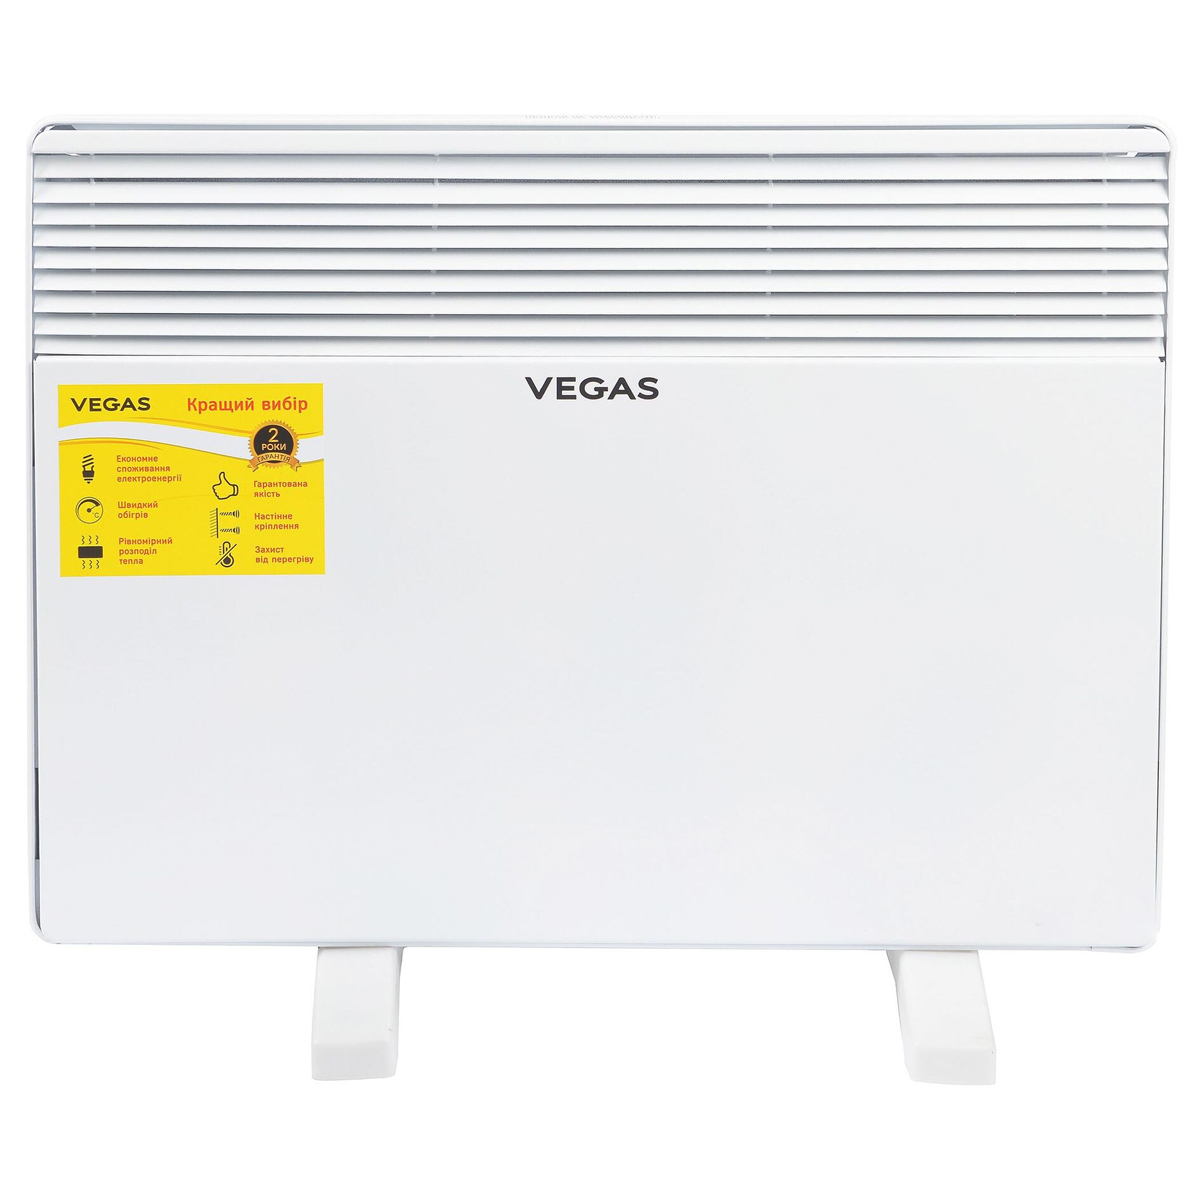 Цена электроконвектор vegas мощностью 1000 вт / 1 квт Vegas VKH-1000 в Киеве